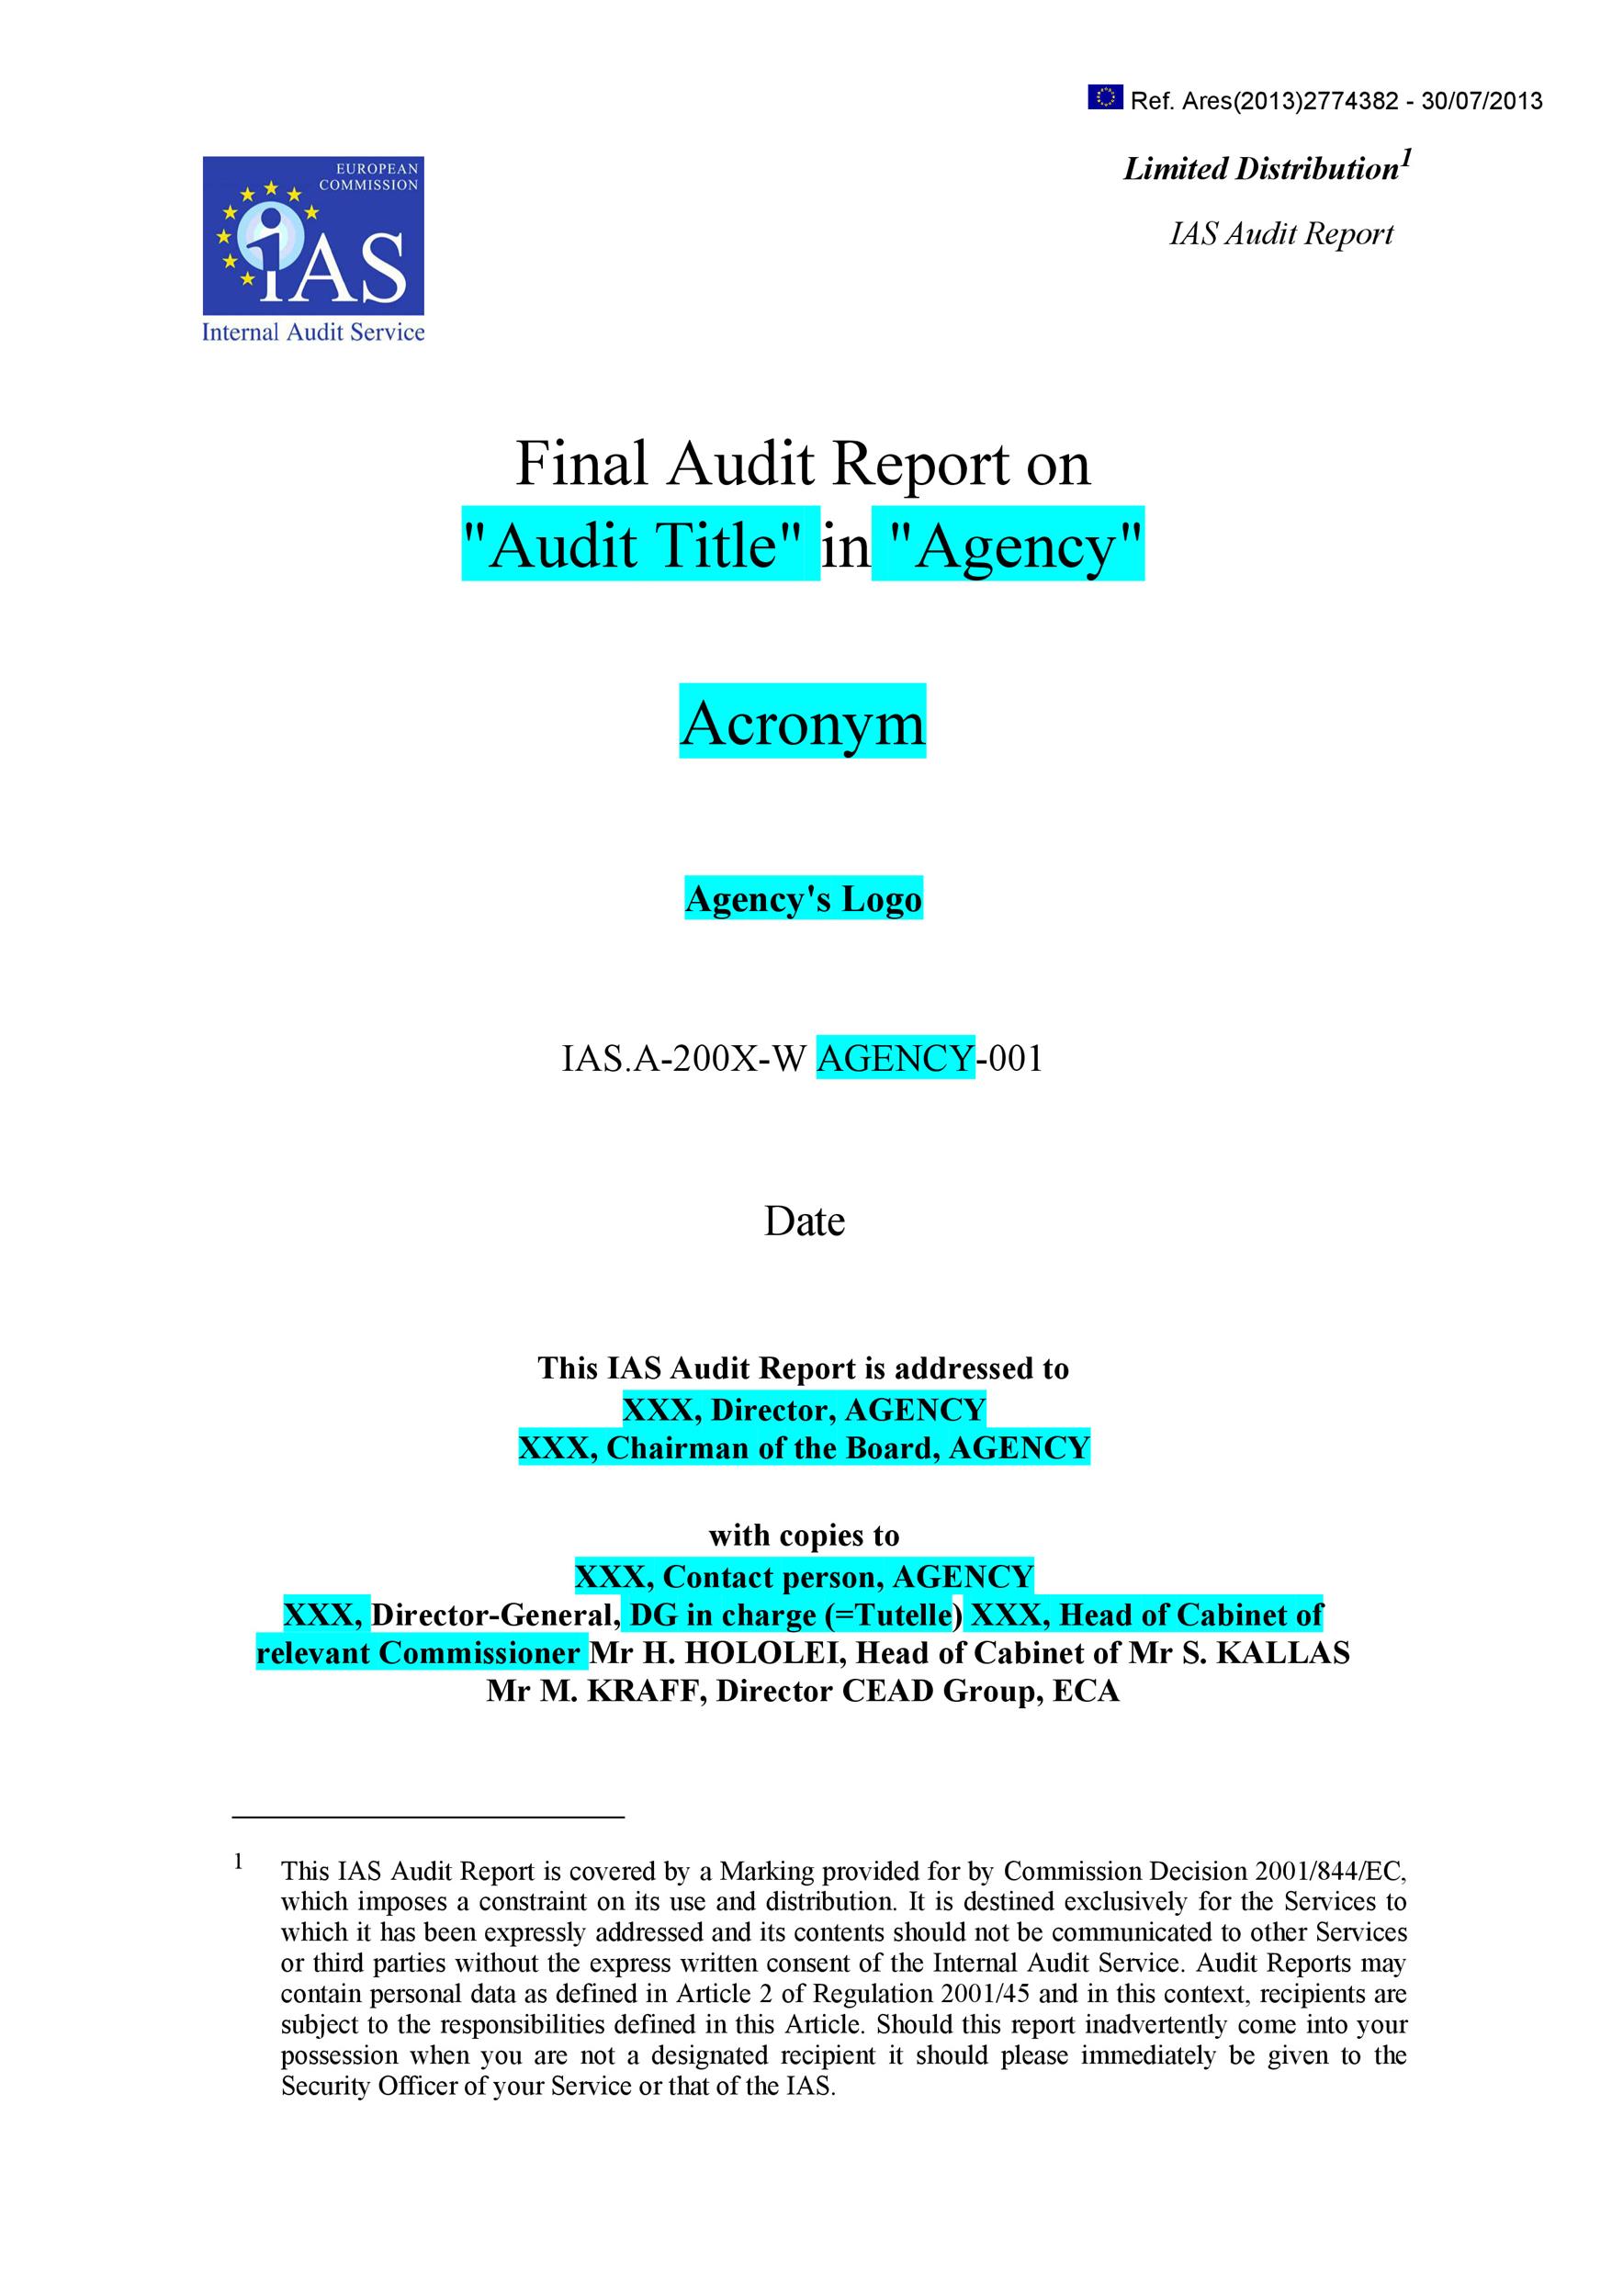 50 Free Audit Report Templates (Internal Audit Reports) ᐅ TemplateLab